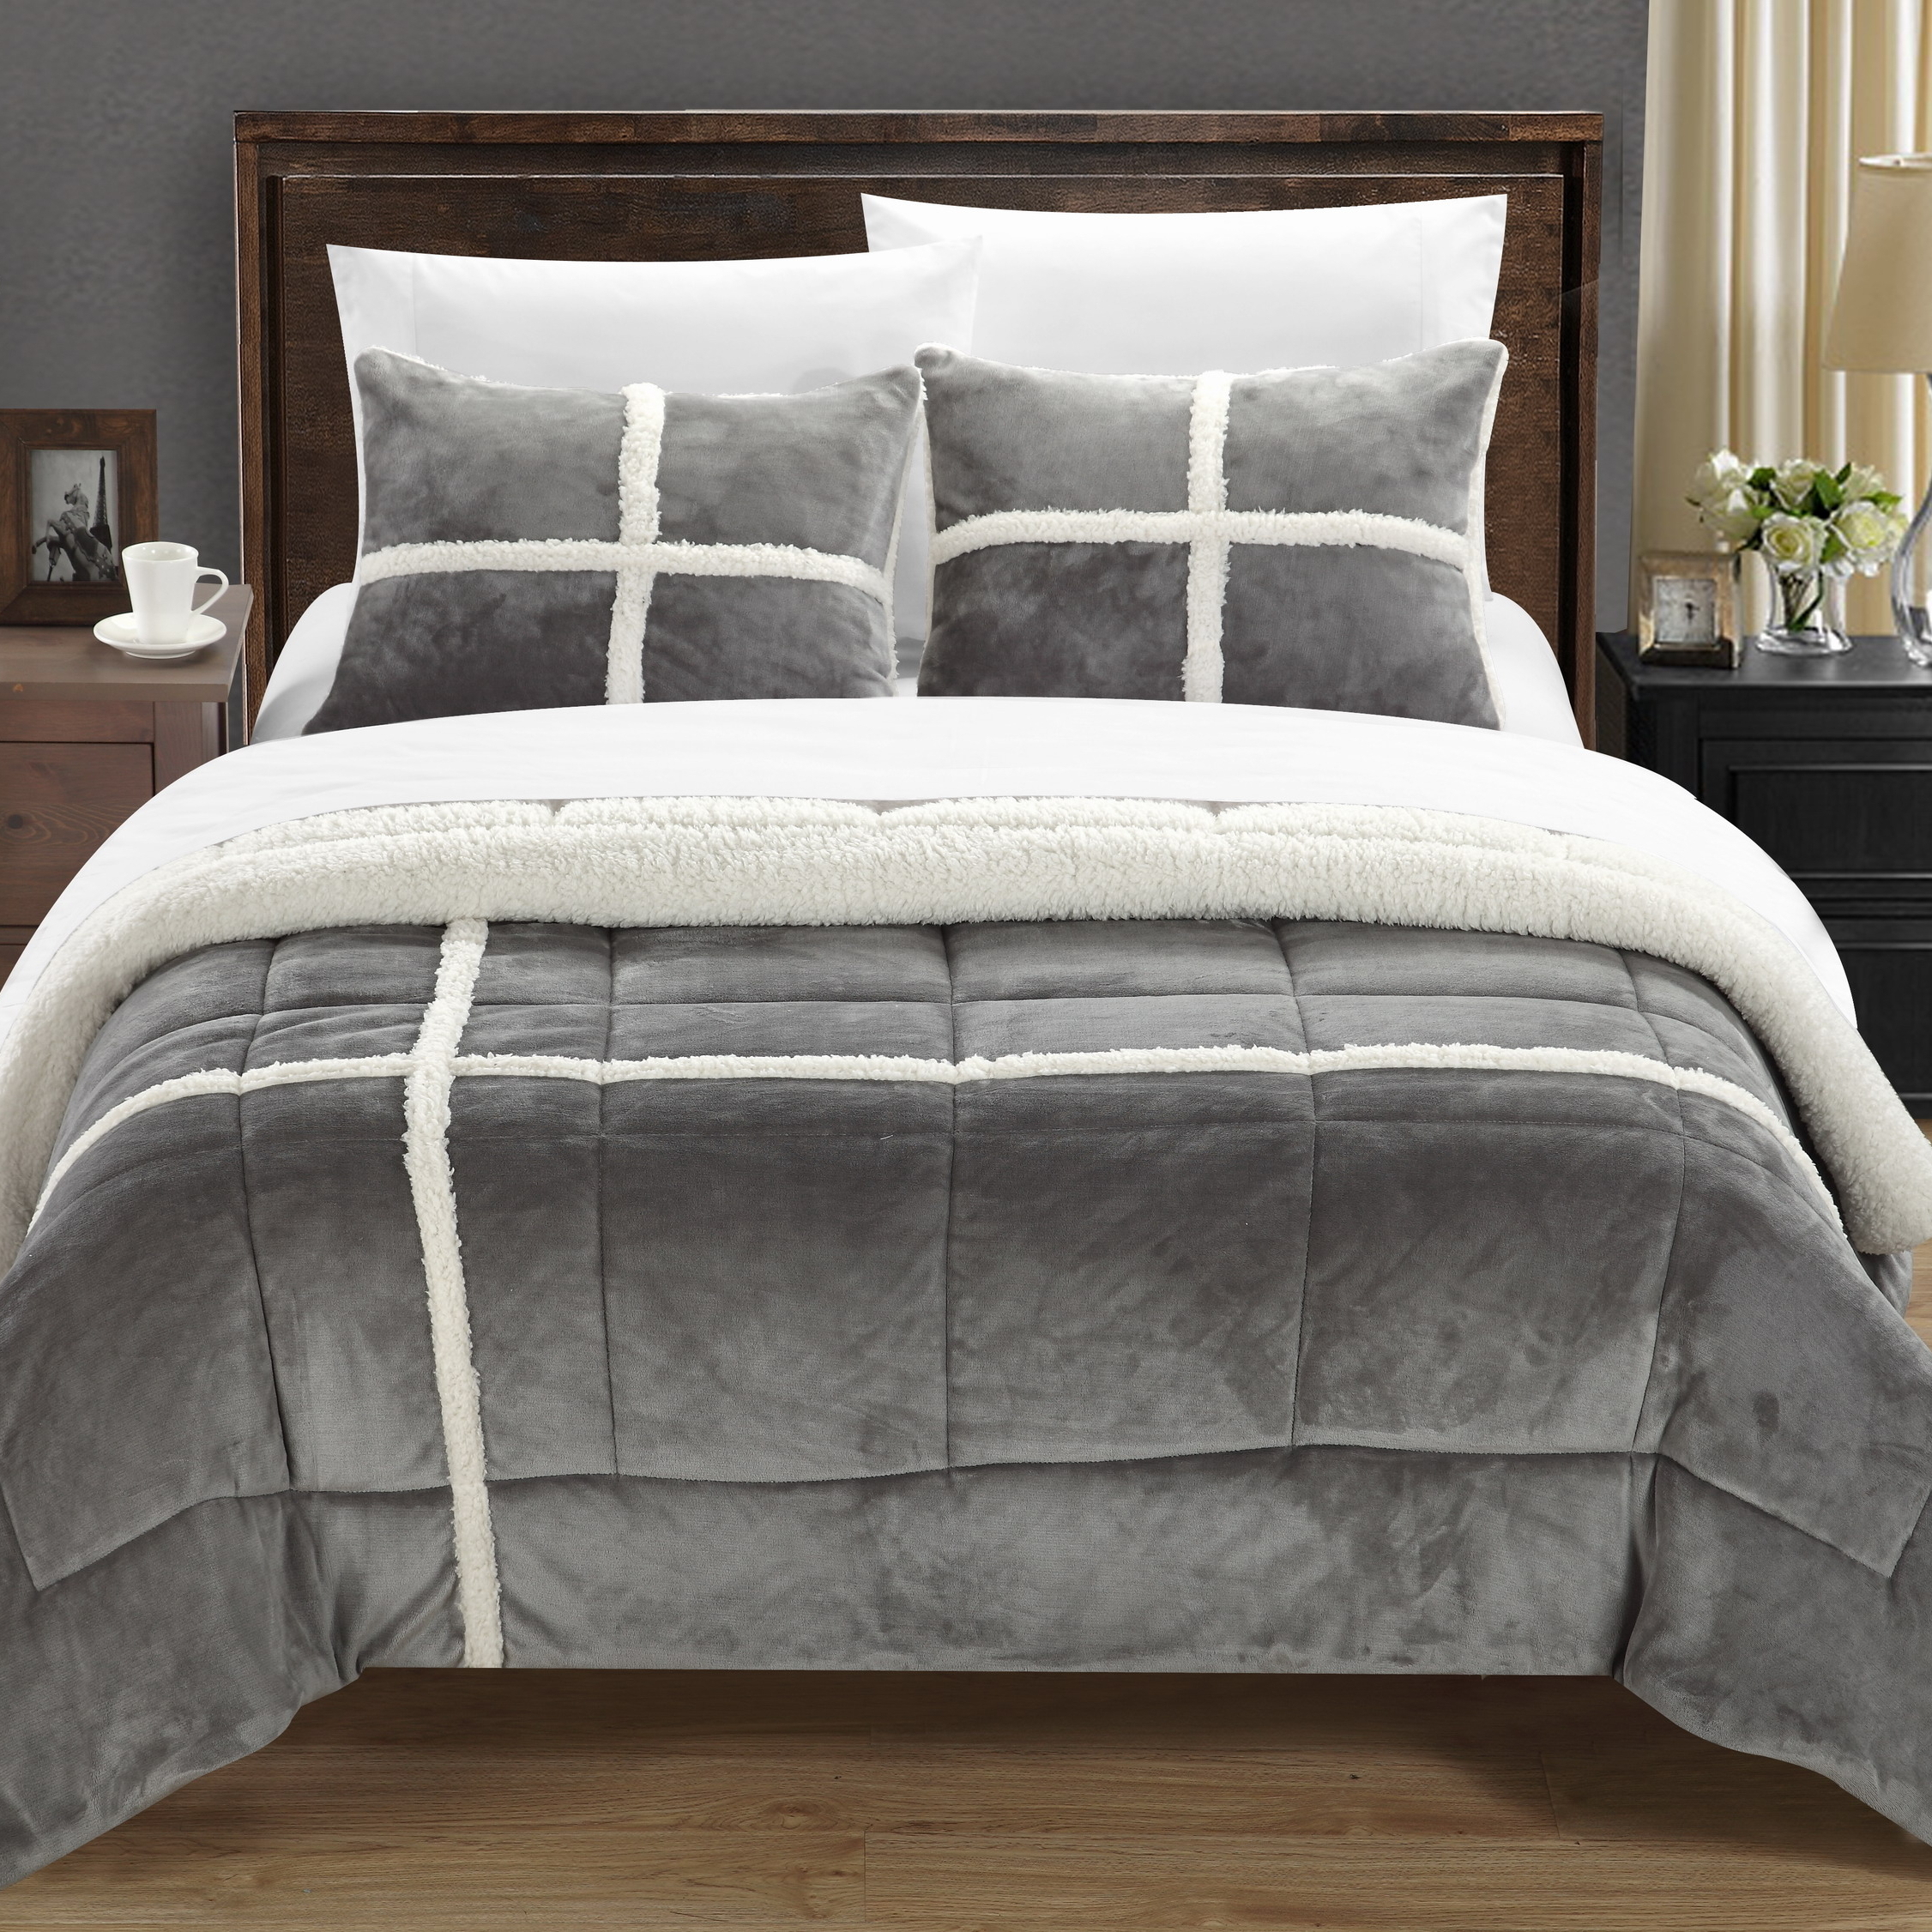 Chloe 3 Or 2 Piece Comforter Set Ultra Plush Micro Mink Sherpa Lined Bedding â Decorative Pillow Shams Included - Silver, Twin - 2 Piece